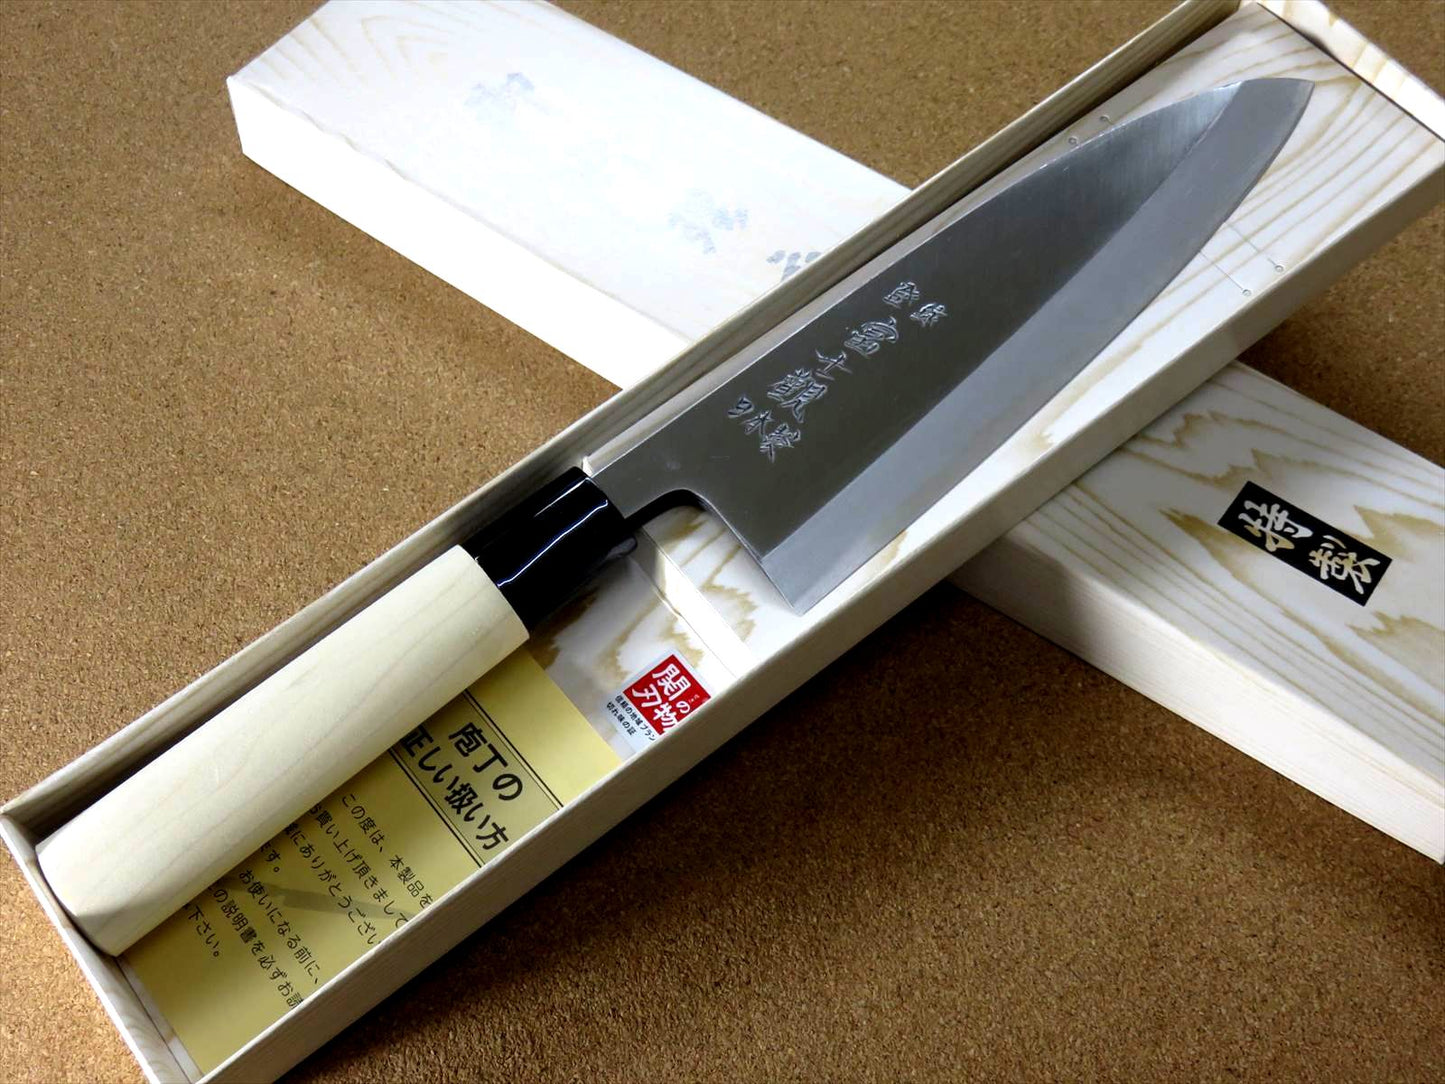 Japanese Kitchen Deba Knife 165mm 6.5 inch Single edged Right handed SEKI JAPAN